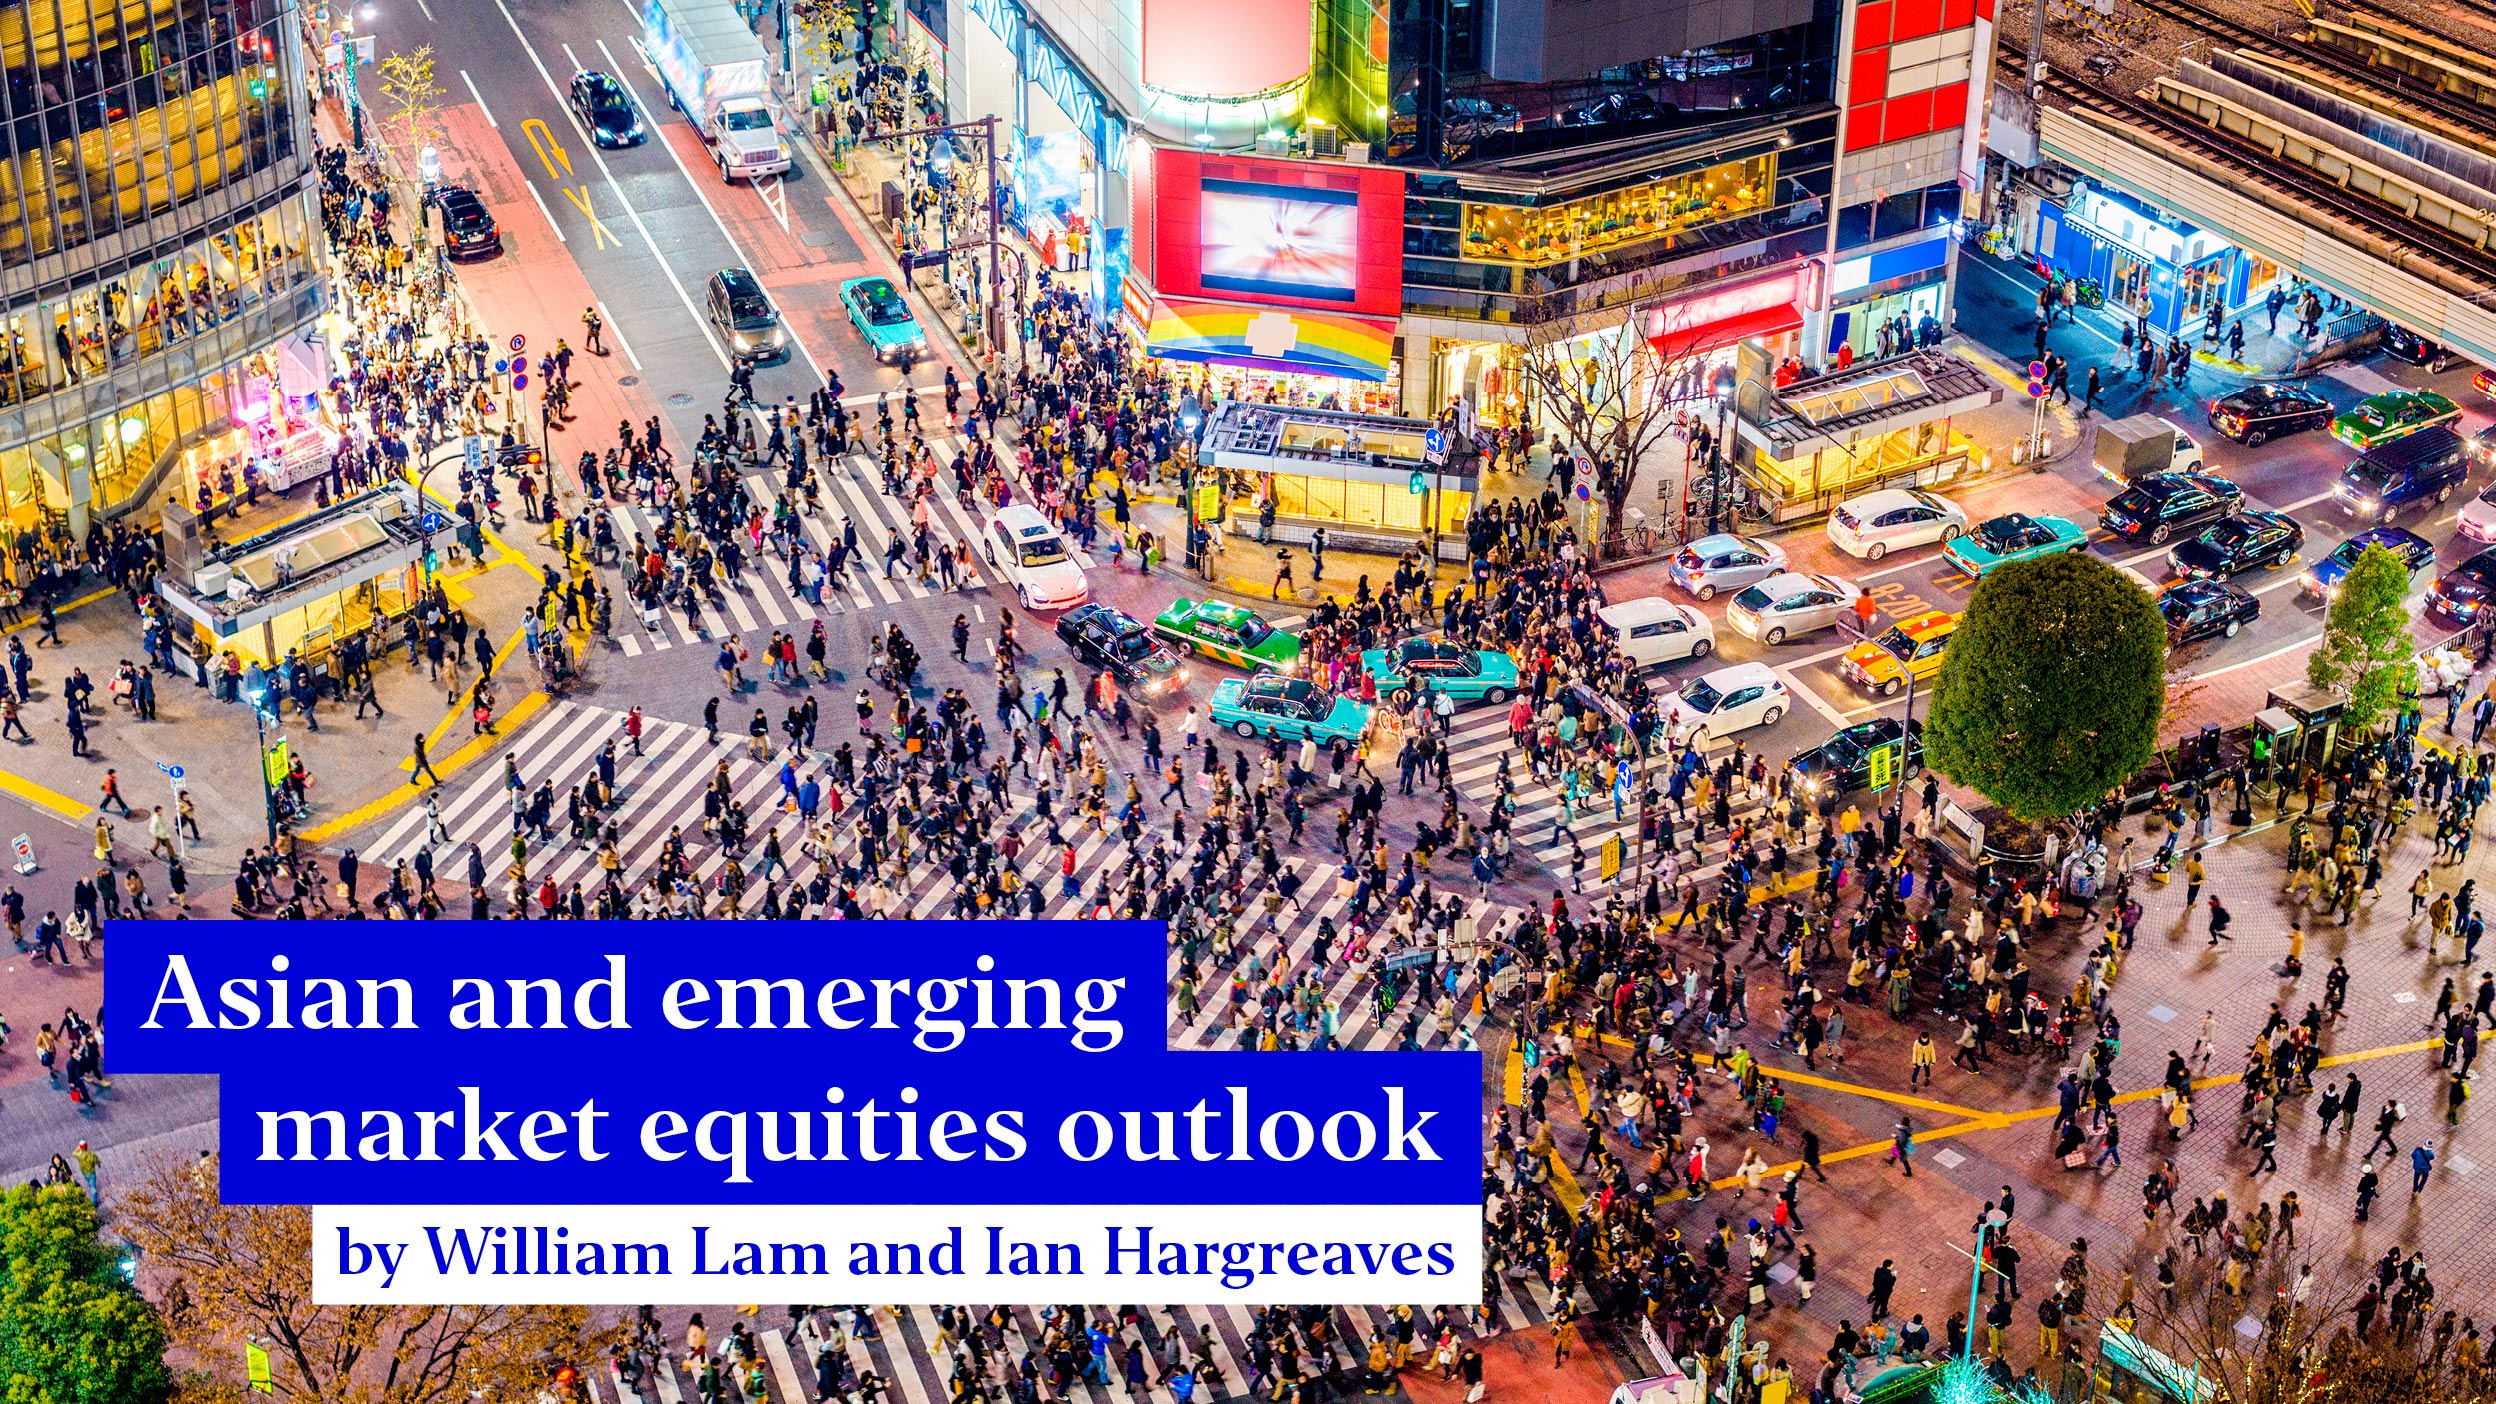 Asian equities outlook